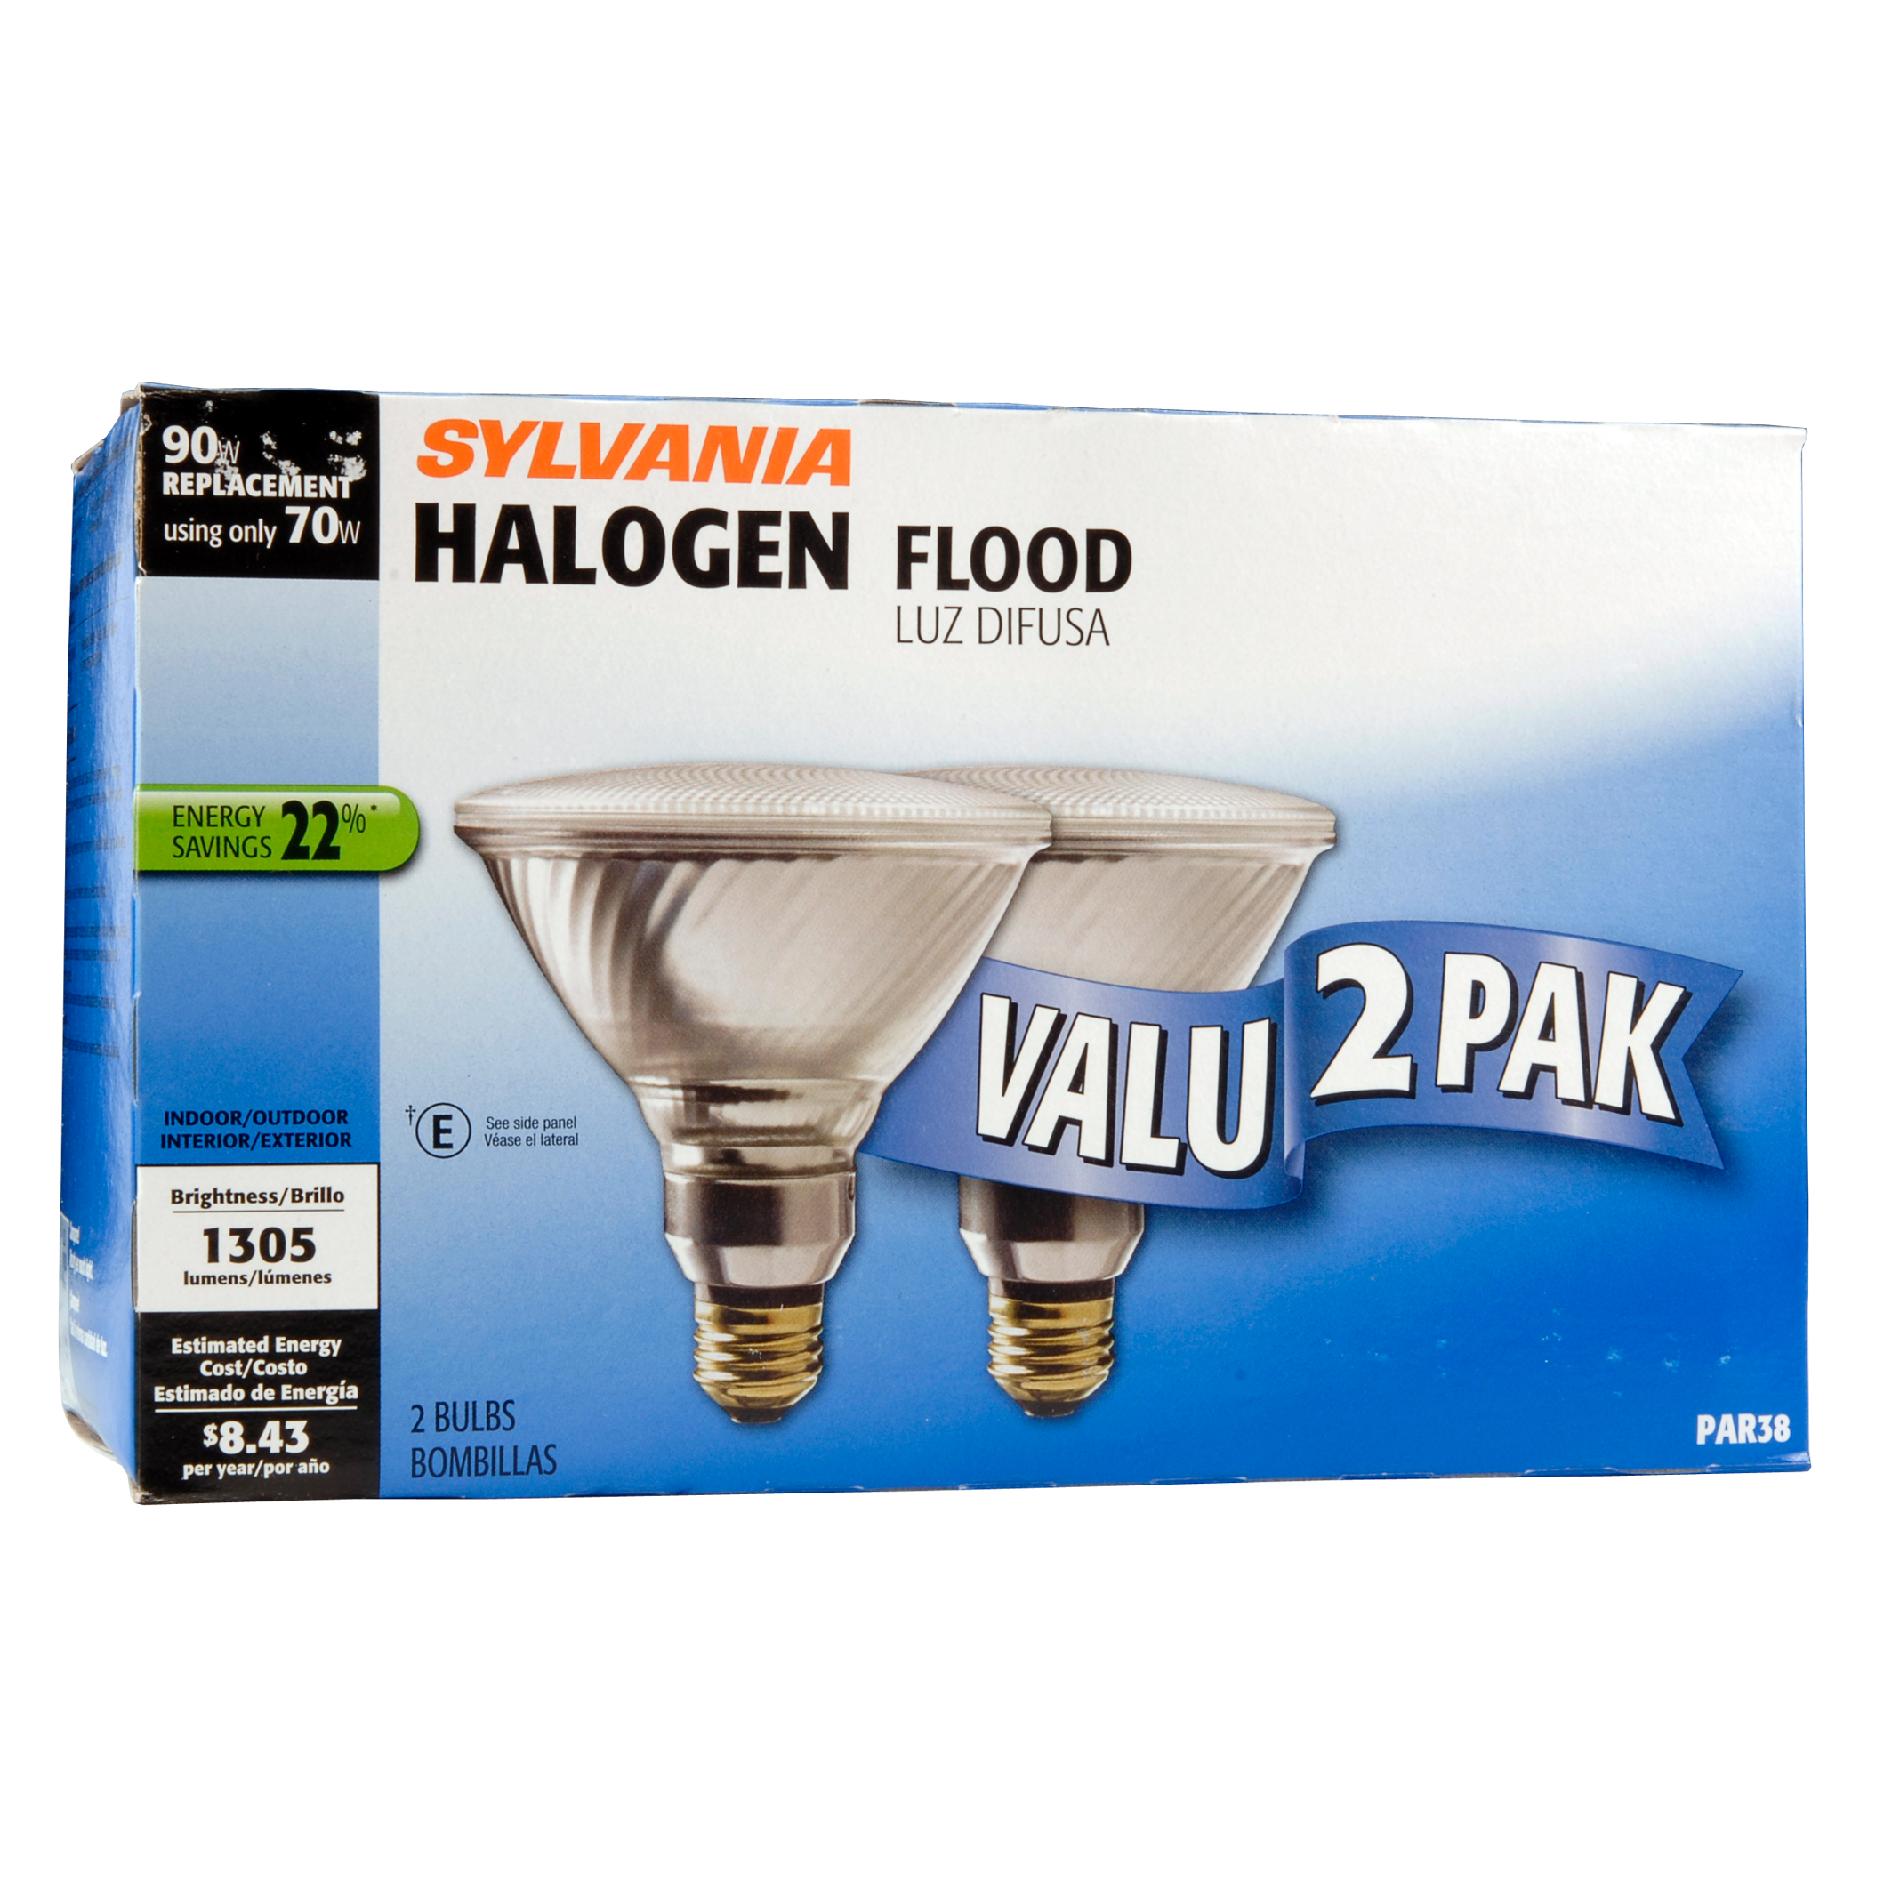 Sylvania Halogen Narrow Flood Lamp PAR38-Medium Base 120V Light Bulb 70W Equivalent 100W - 2 Pack